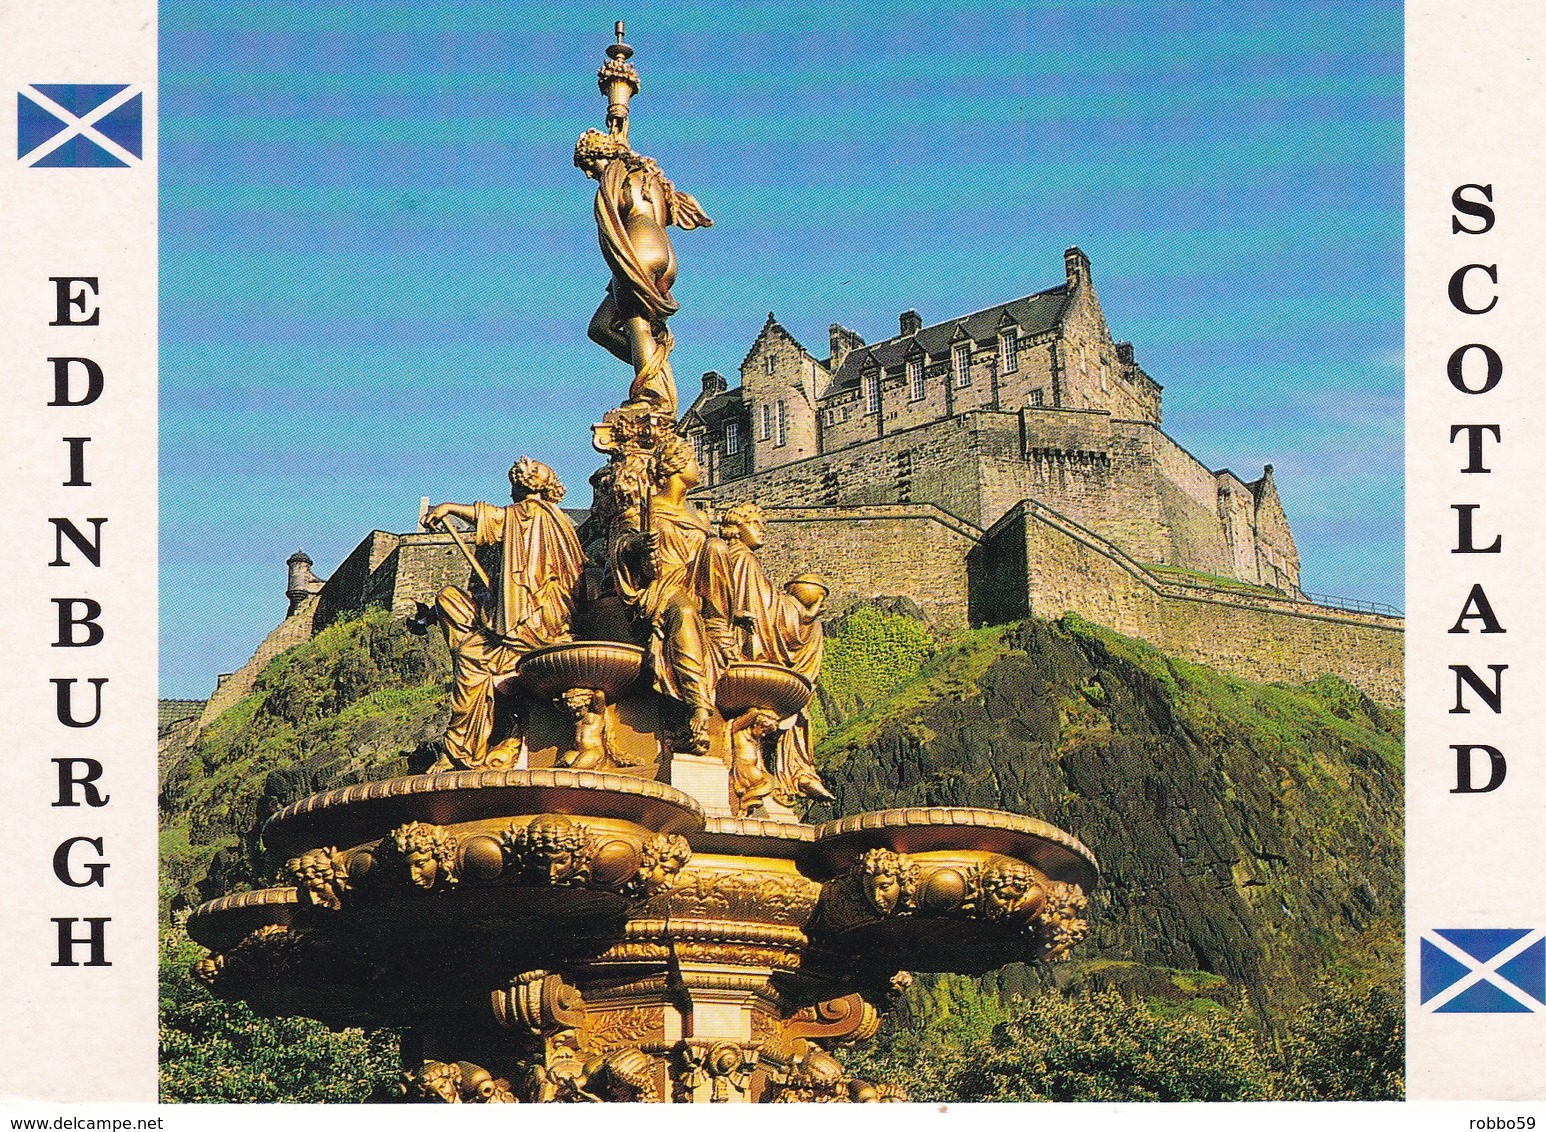 Scotland Edinburgh Ross Fountain To Princess Street Gardens Postcard Unused Good Condition - Midlothian/ Edinburgh